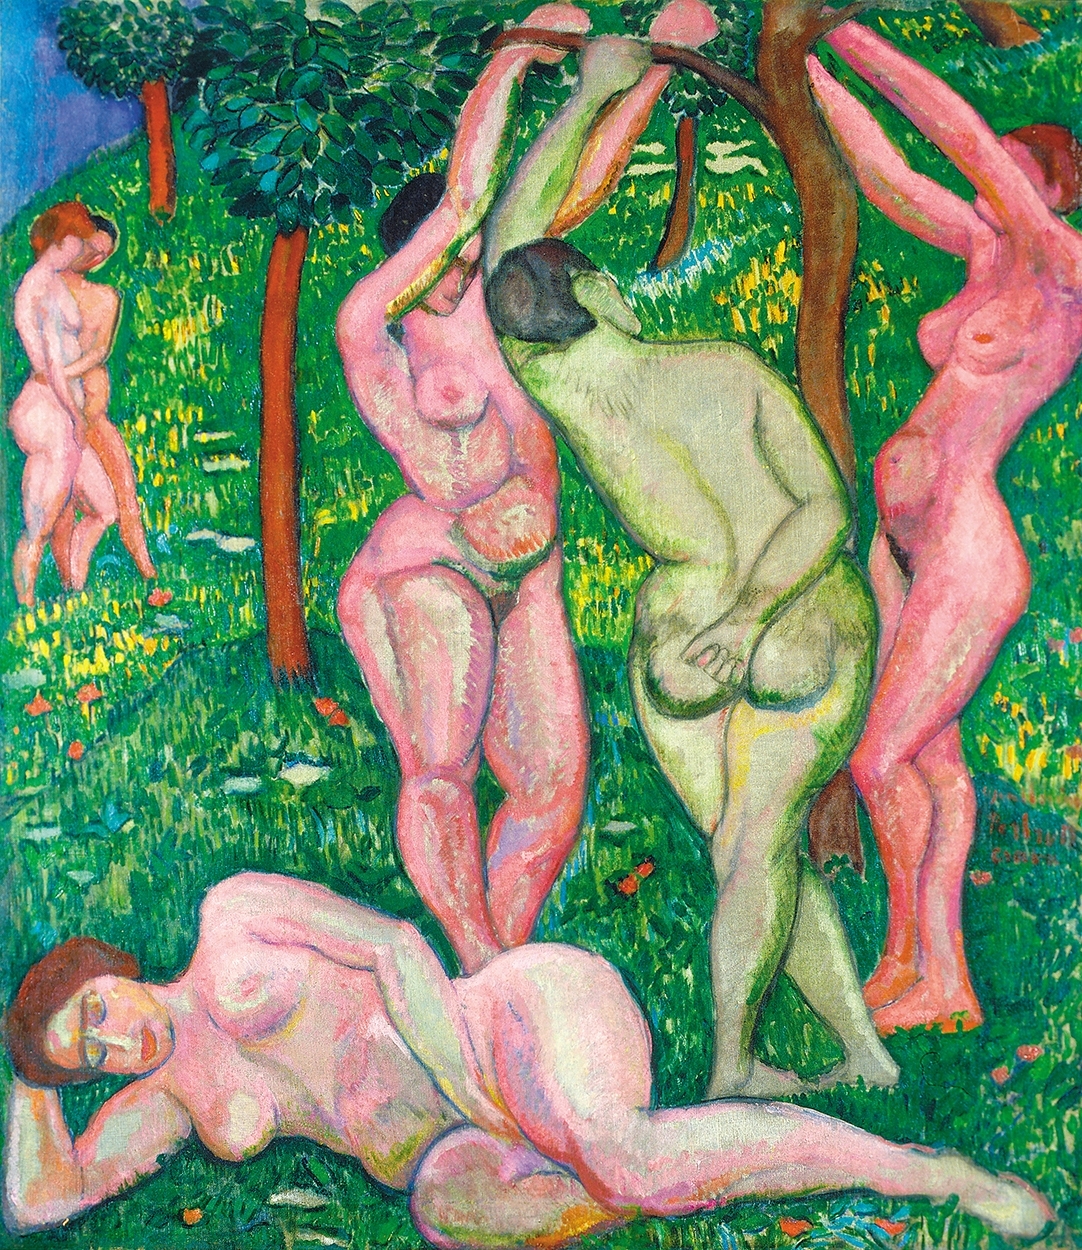 Perlrott-Csaba Vilmos (1880-1955) Nudes Outside (Eden), between 1907-1909